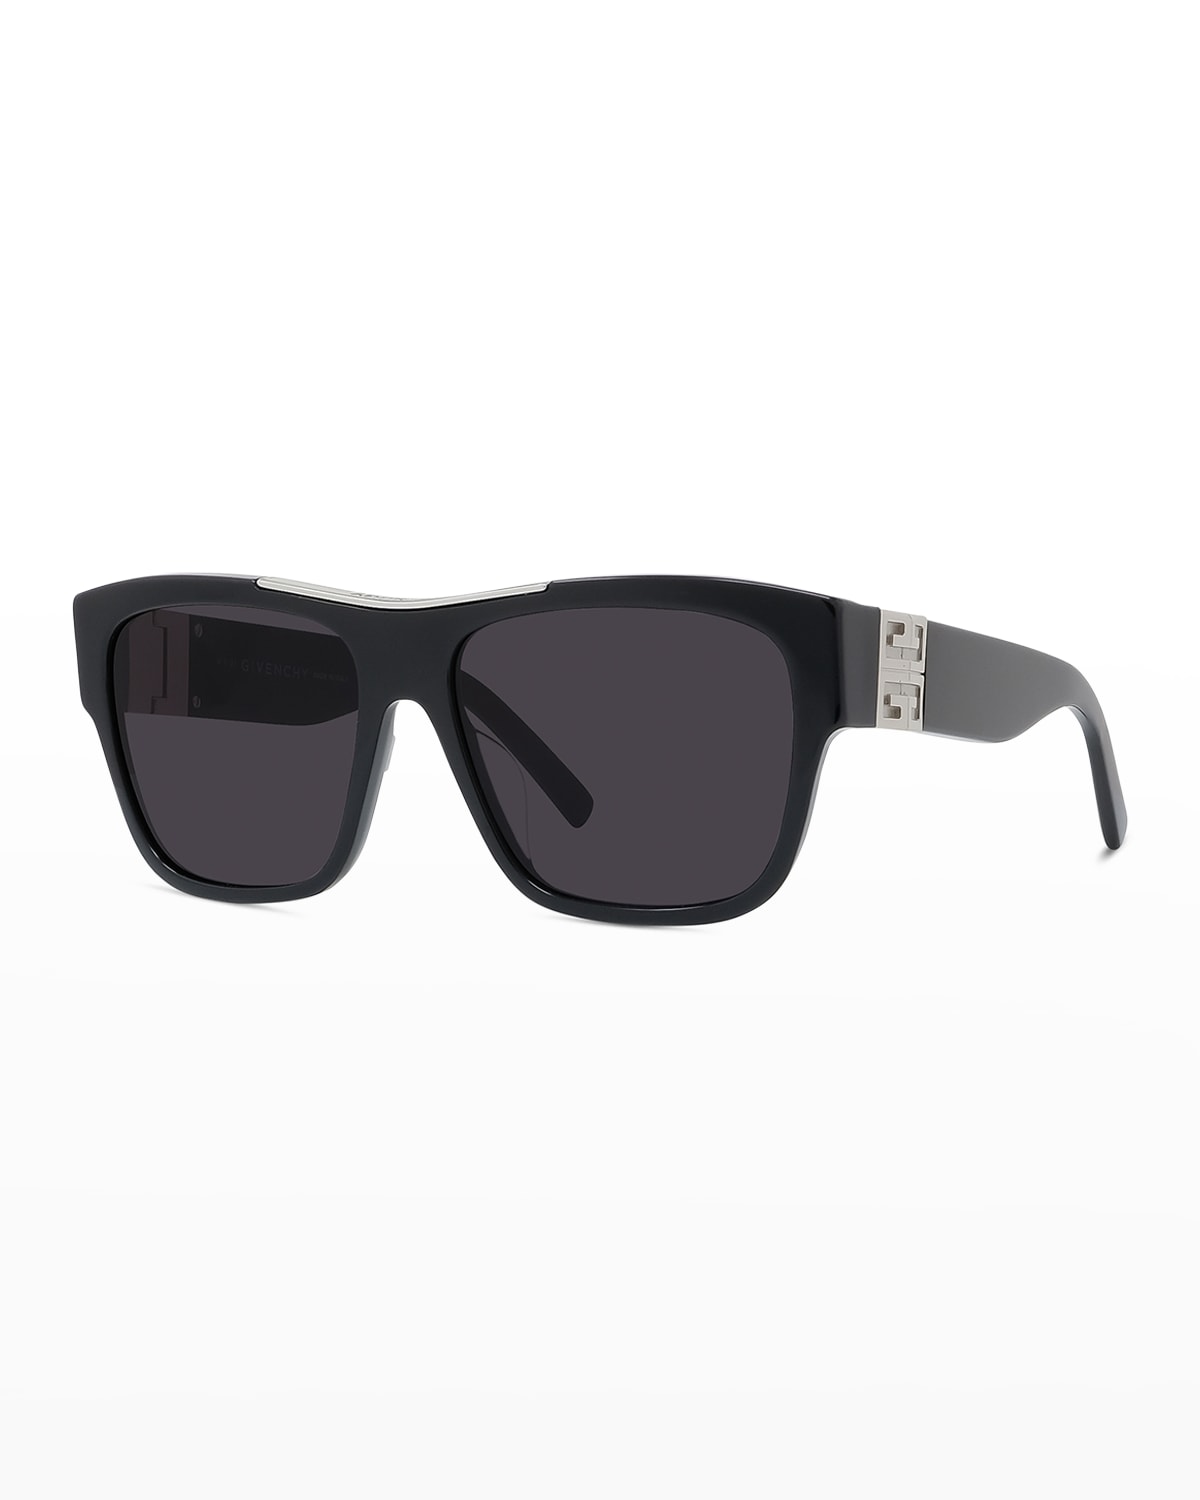 Givenchy Men's 4g Plaqué Saddle-bridge Square Sunglasses In Black/gray Solid